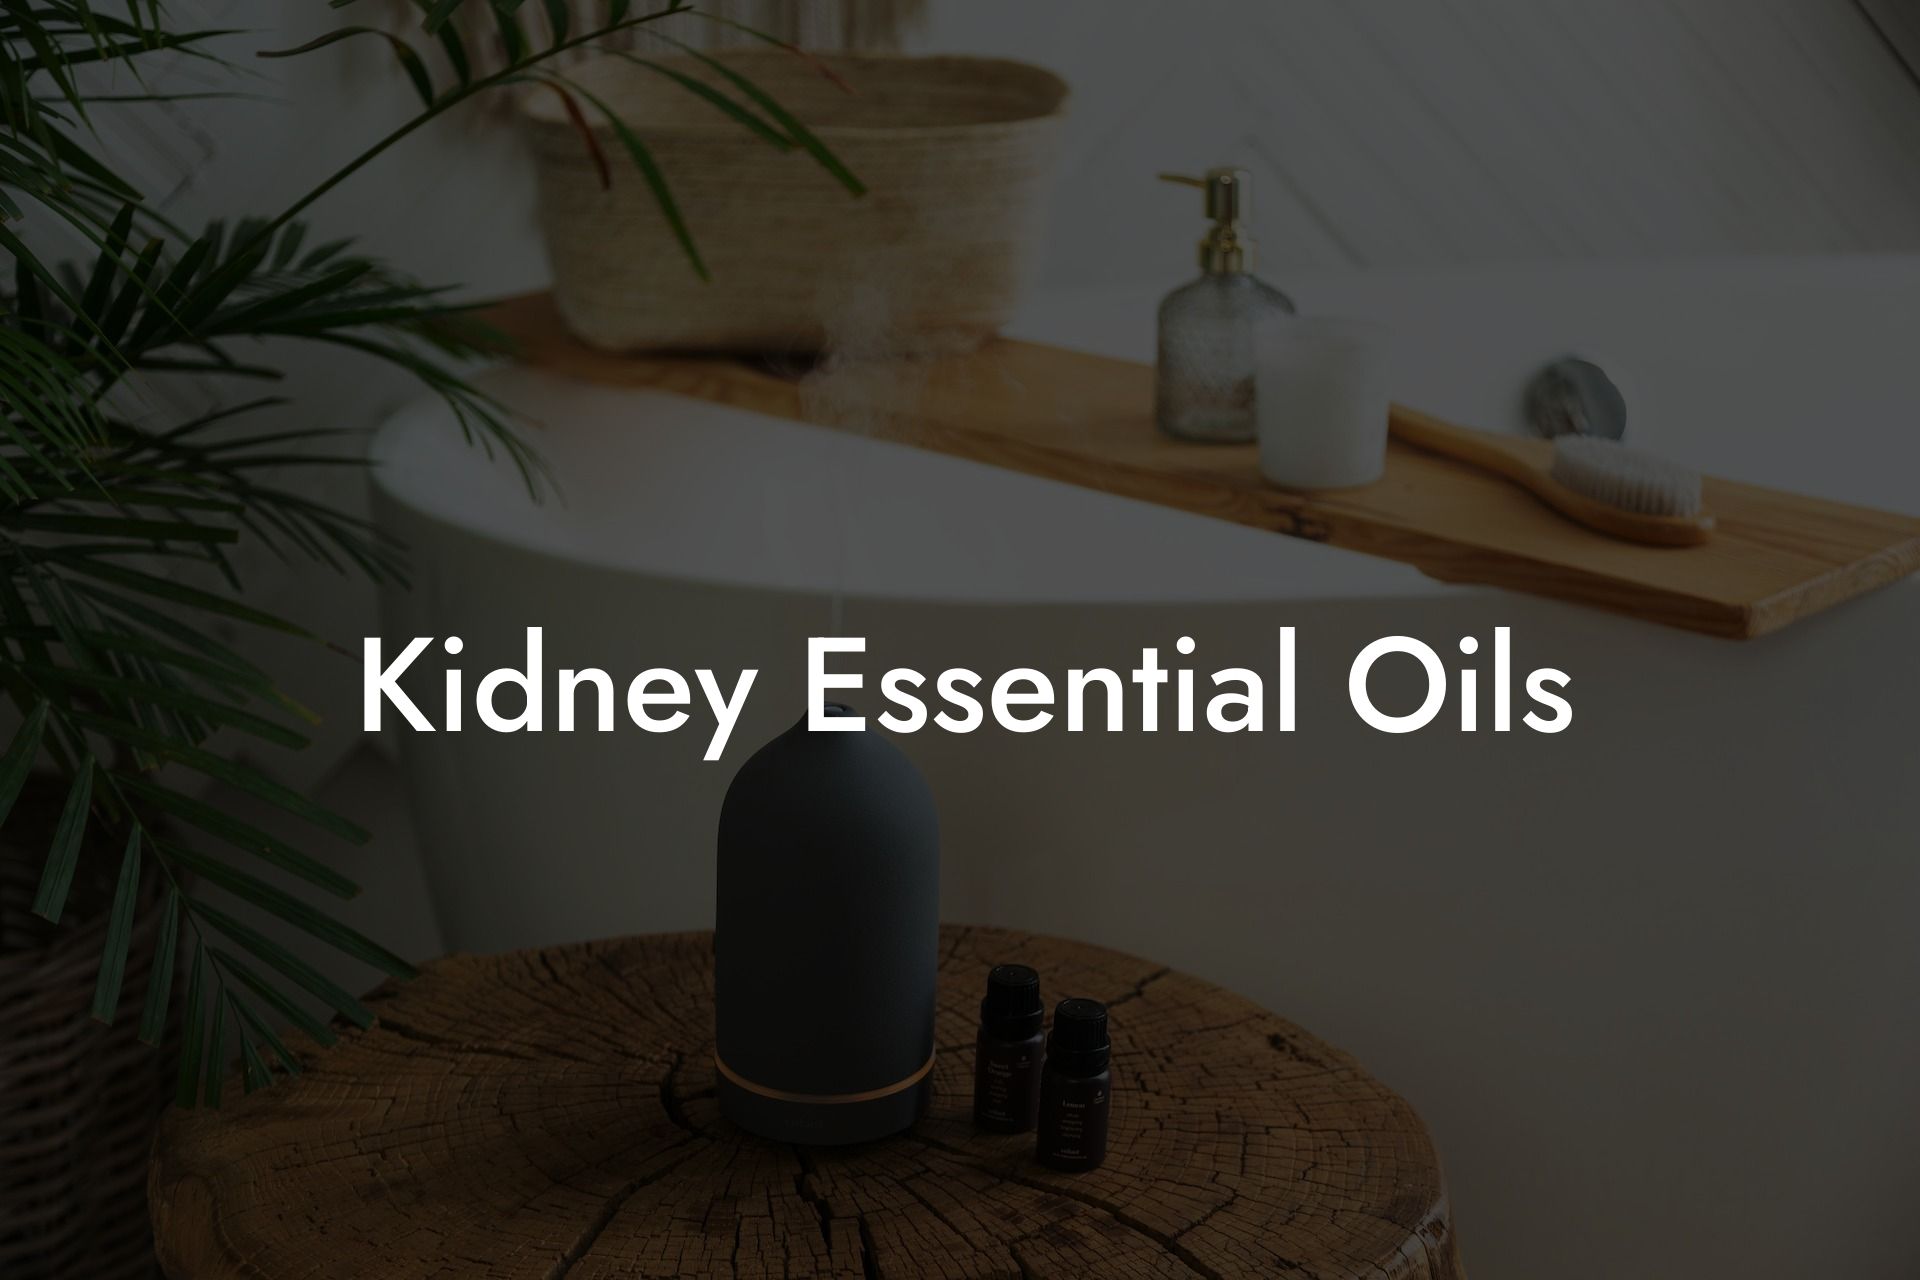 Kidney Essential Oils